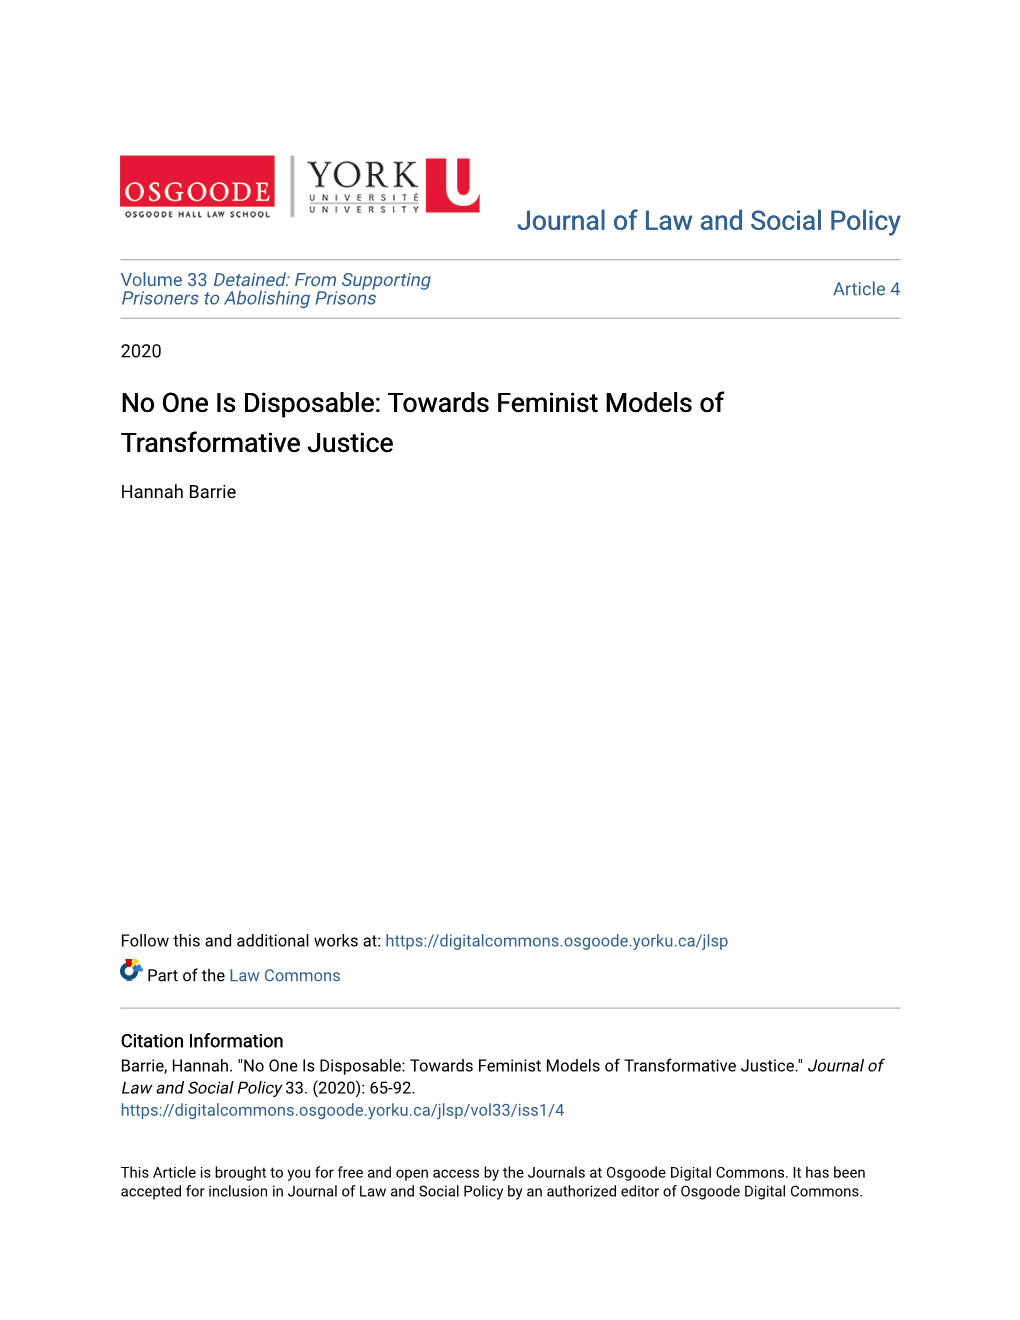 Towards Feminist Models of Transformative Justice